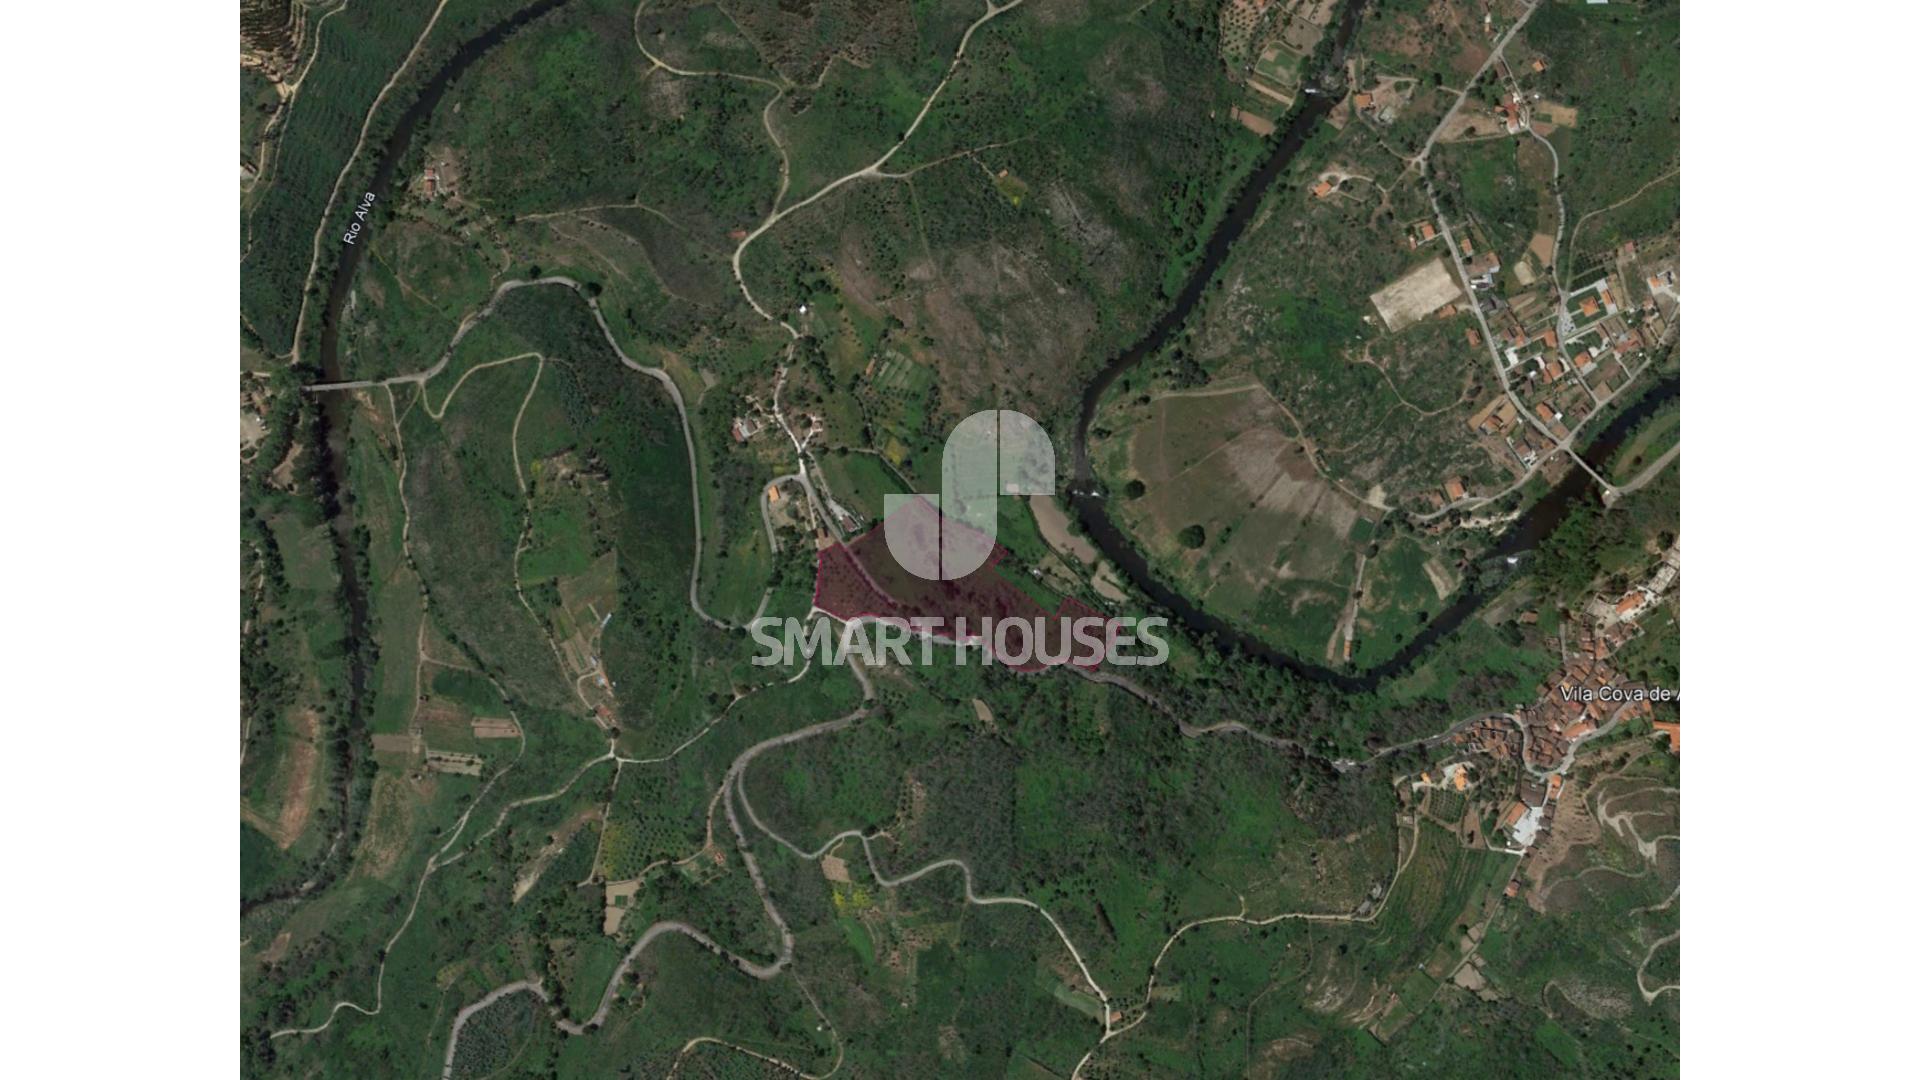 Smart Houses Portugal on Global viewr.com